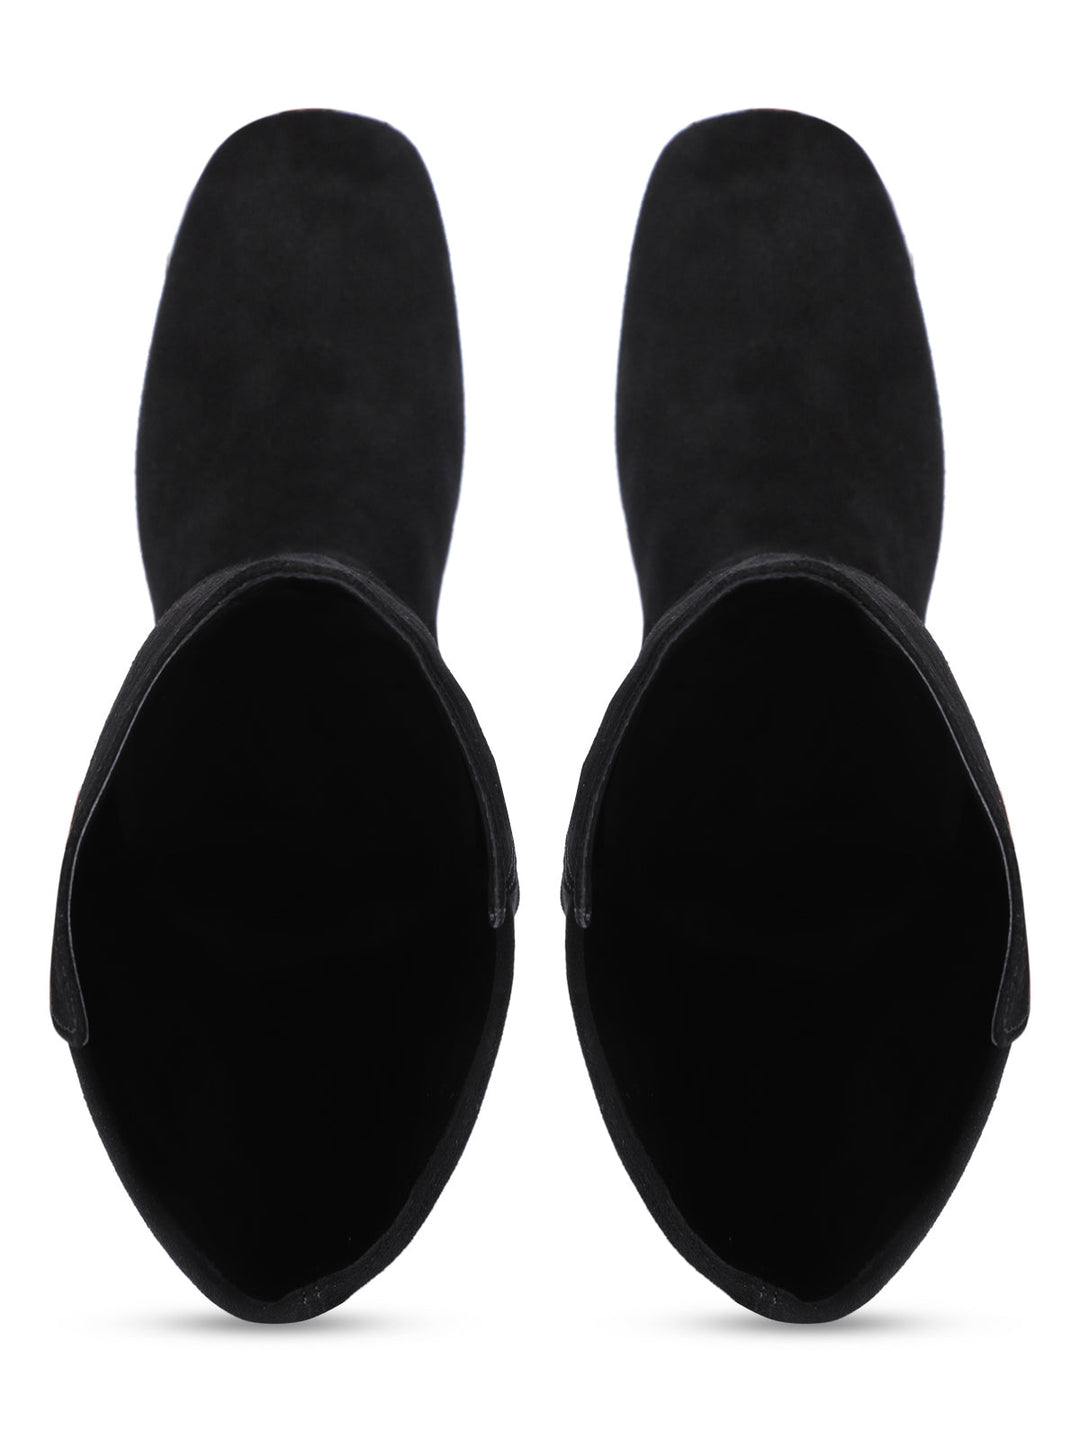 Saint Elexis Black Leather Knee High Boots